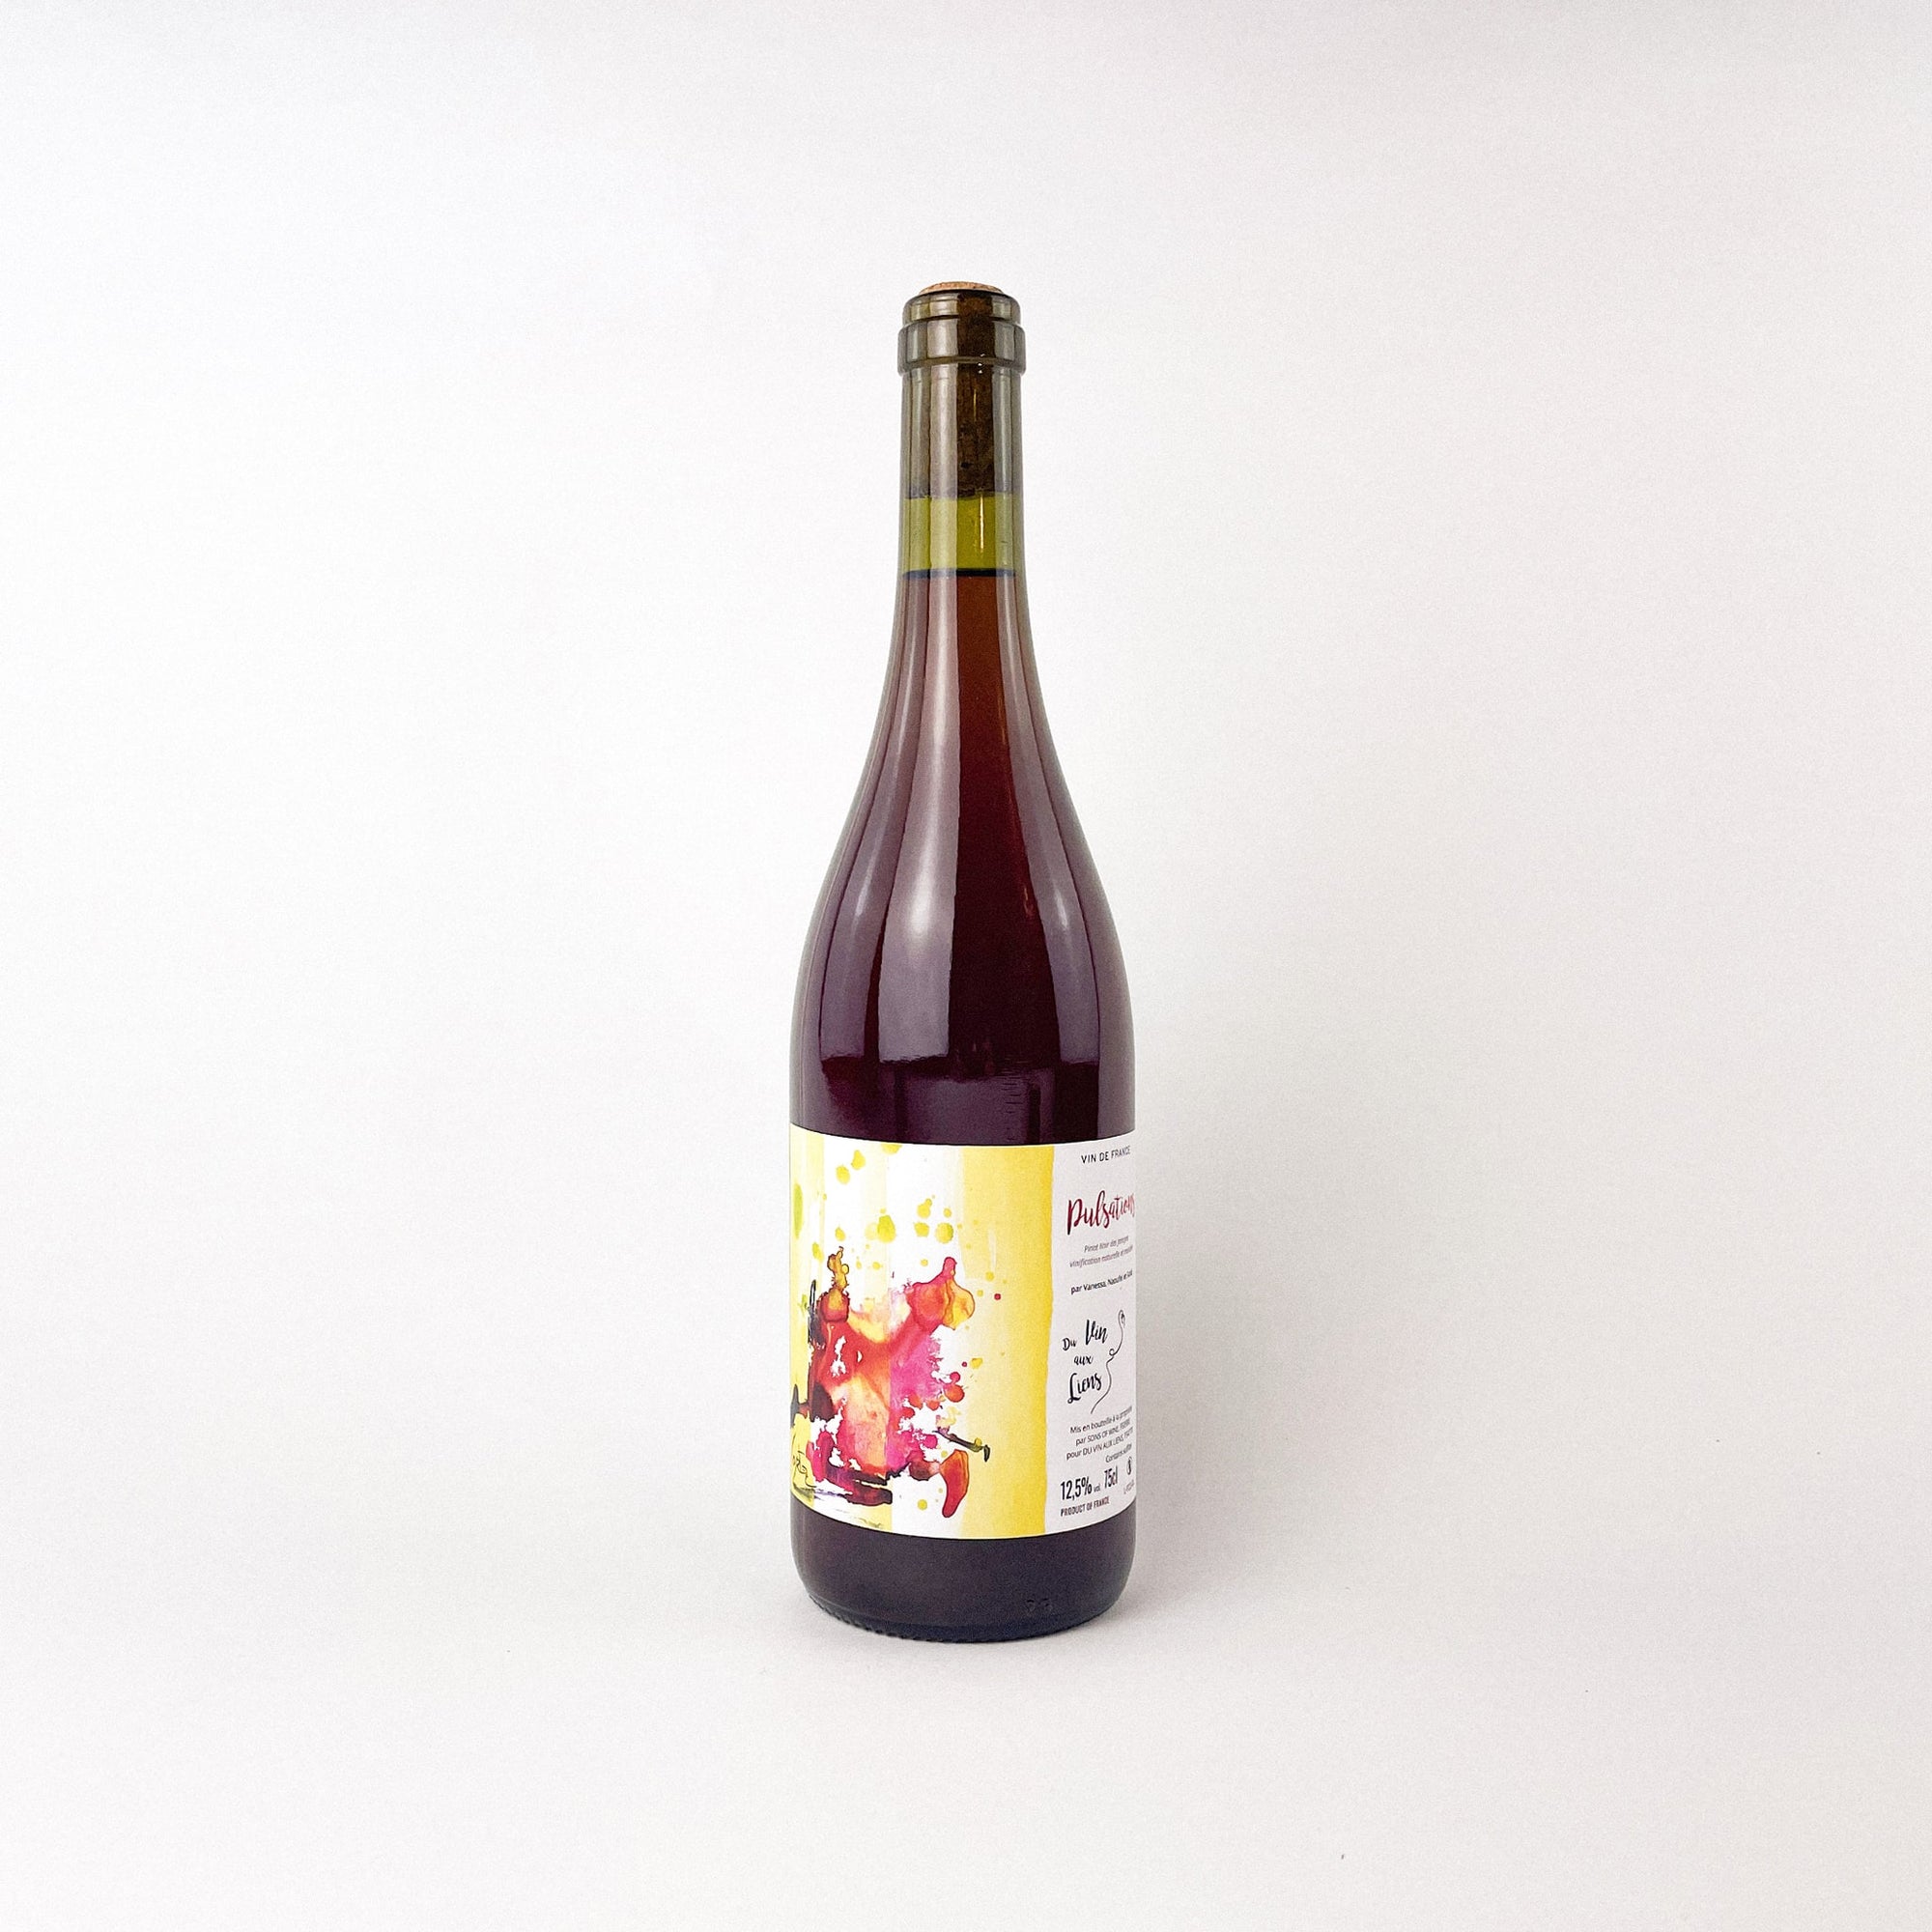 A Bottle Of Rosé Natural Wine From Alsace France, Pulsations by Du vin aux Liens Front View